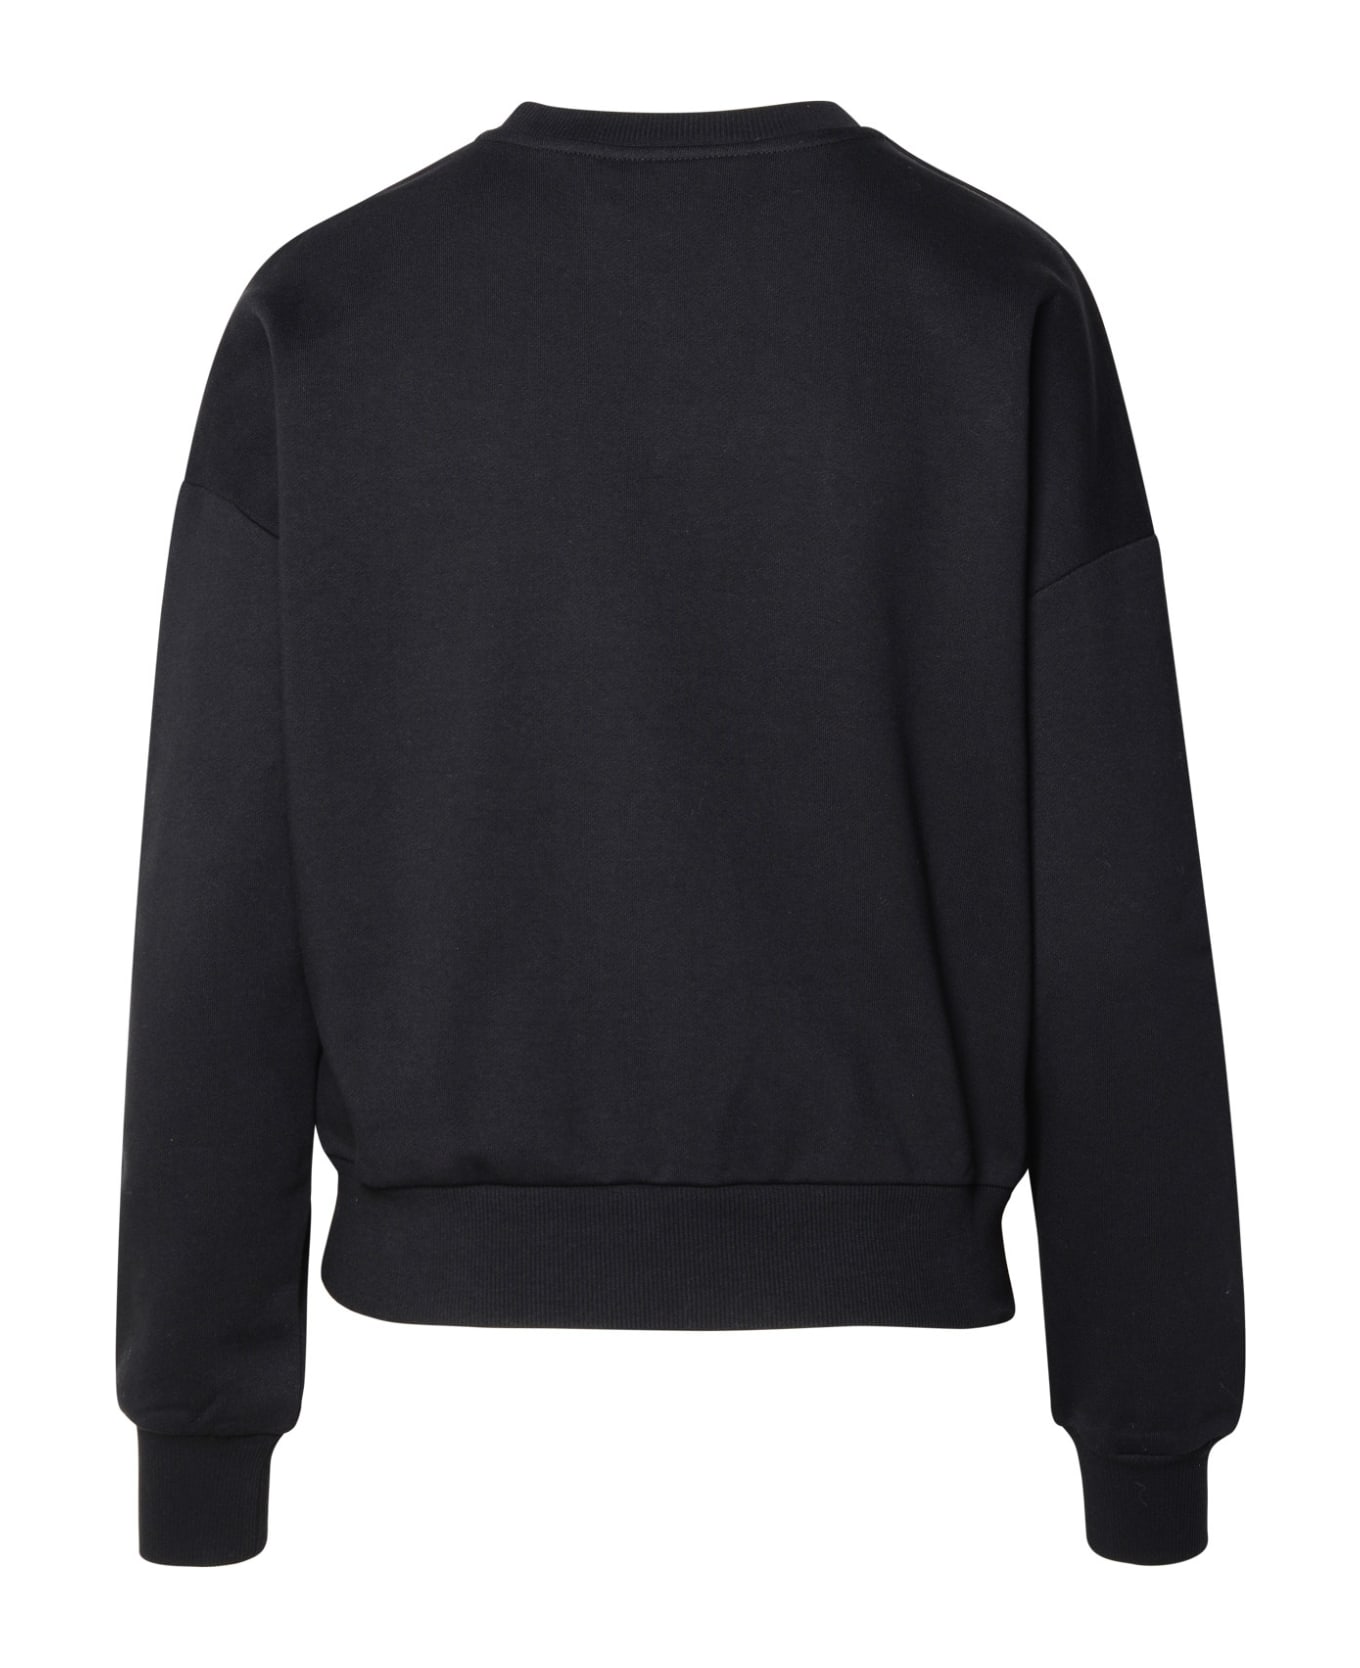 Chiara Ferragni Black Cotton Sweatshirt - Black フリース